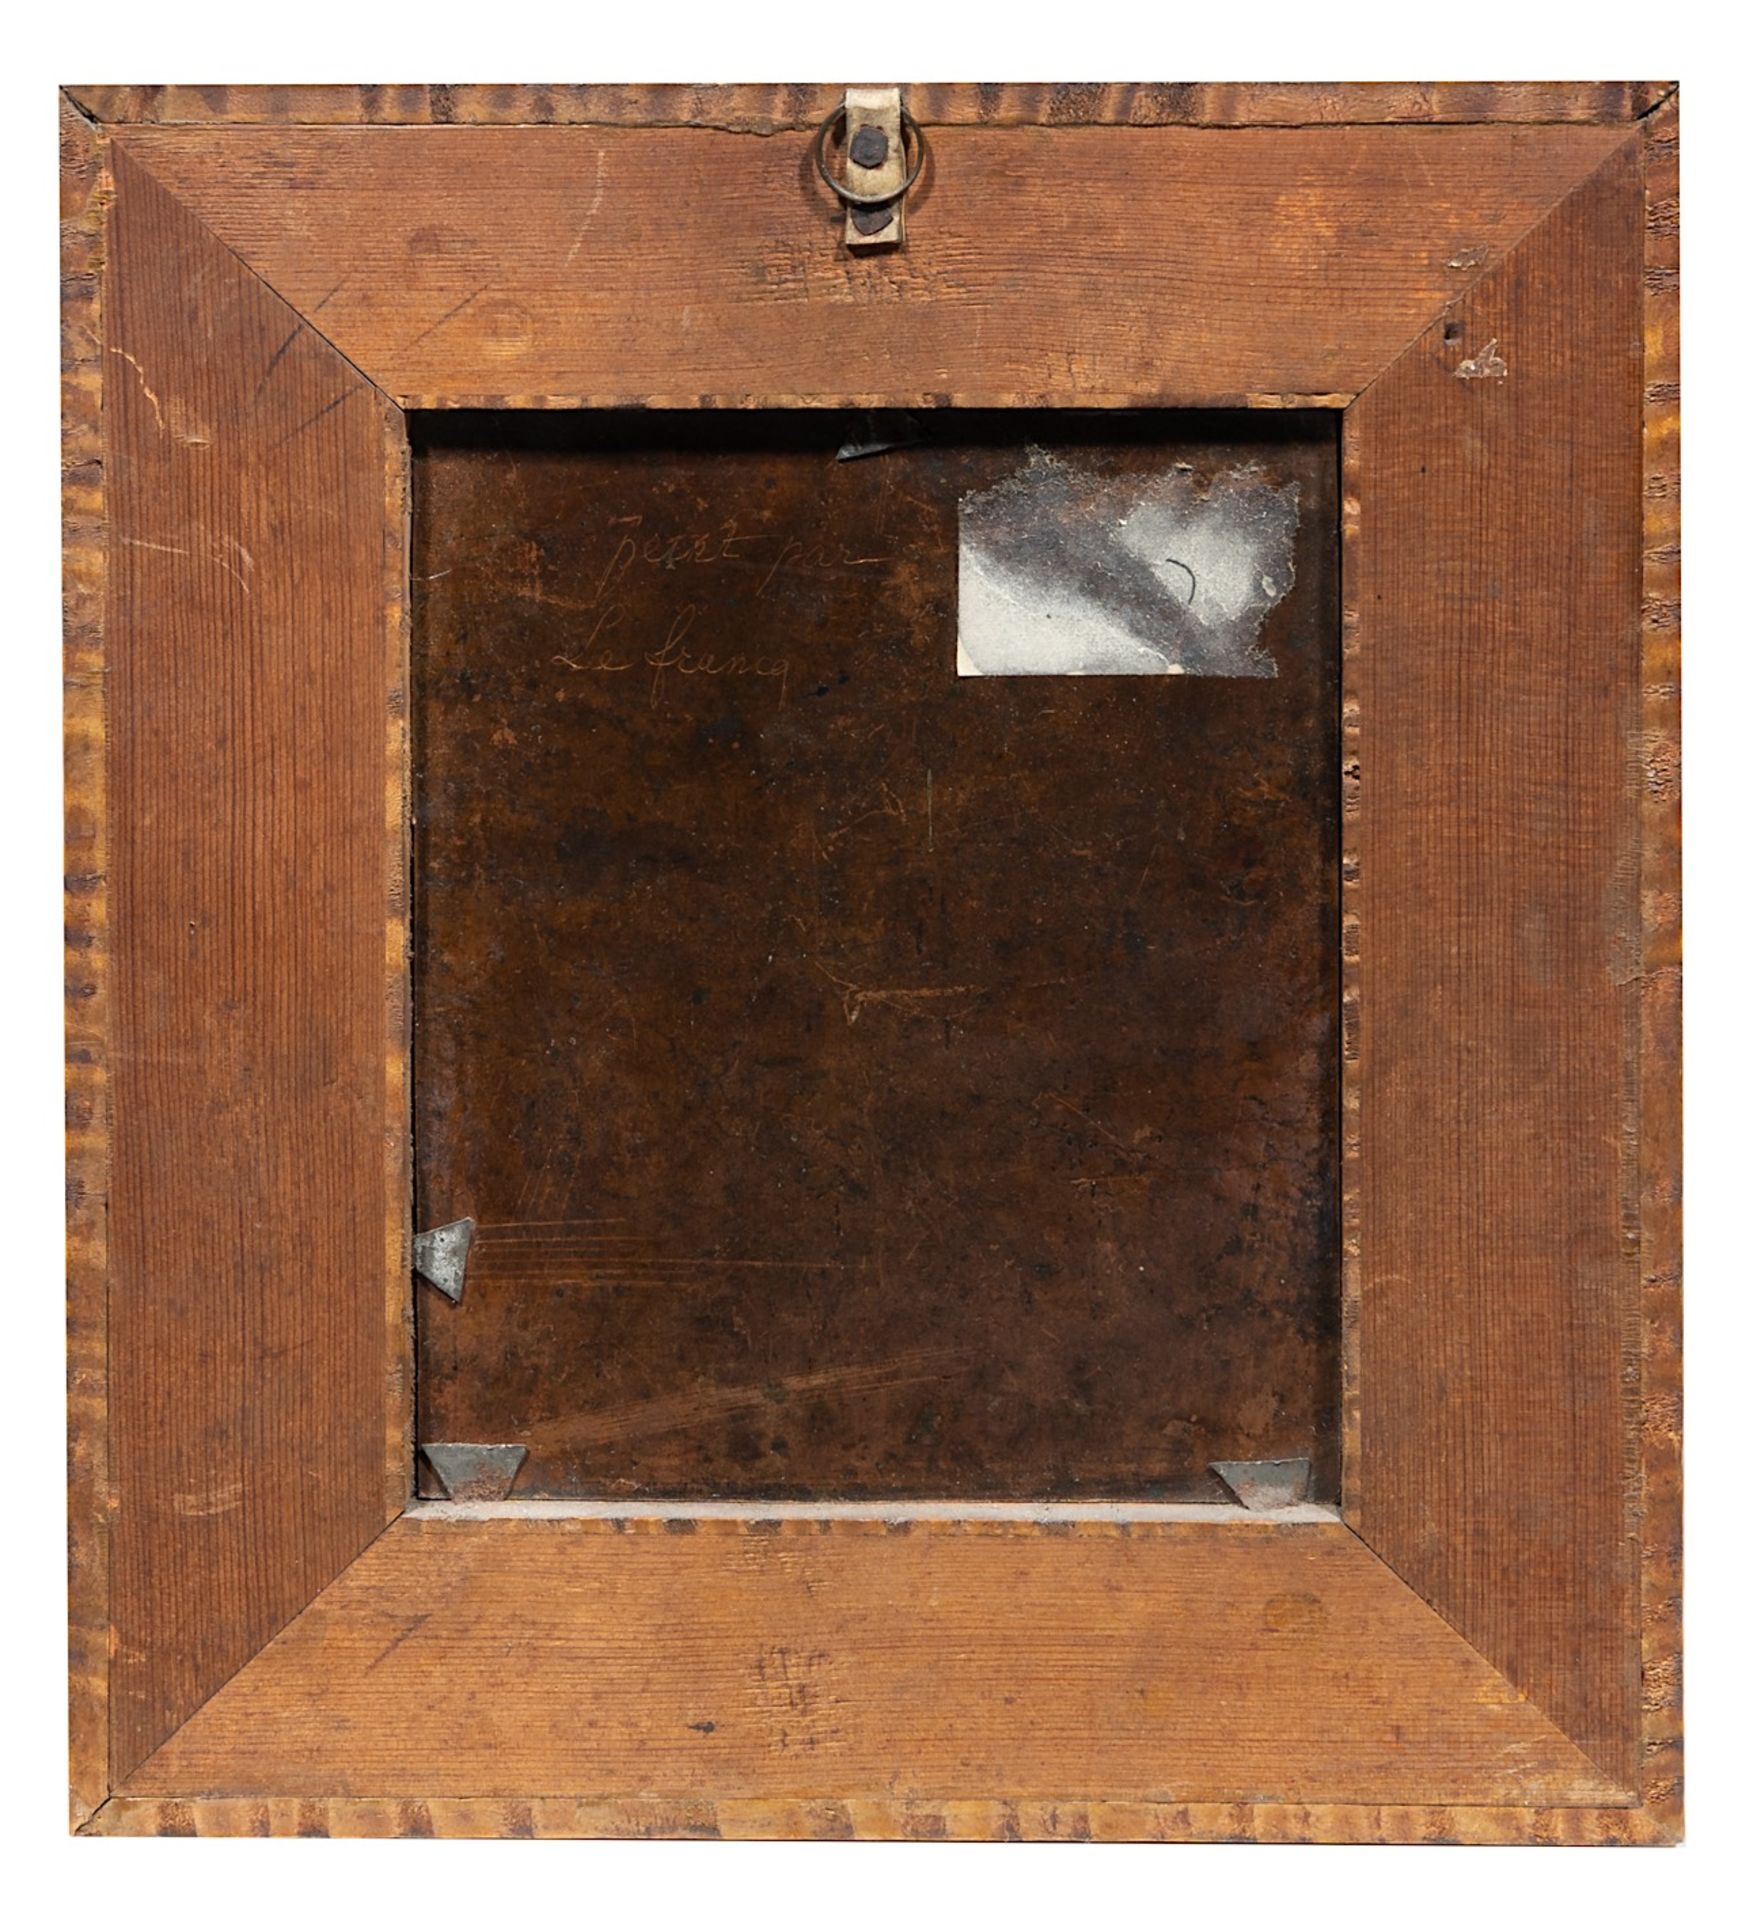 The Arrest of Christ, 17thC, Flemish School, oil on copper 16 x 13 cm. (6.3 x 5.1 in.), Frame: 26 x - Bild 3 aus 5